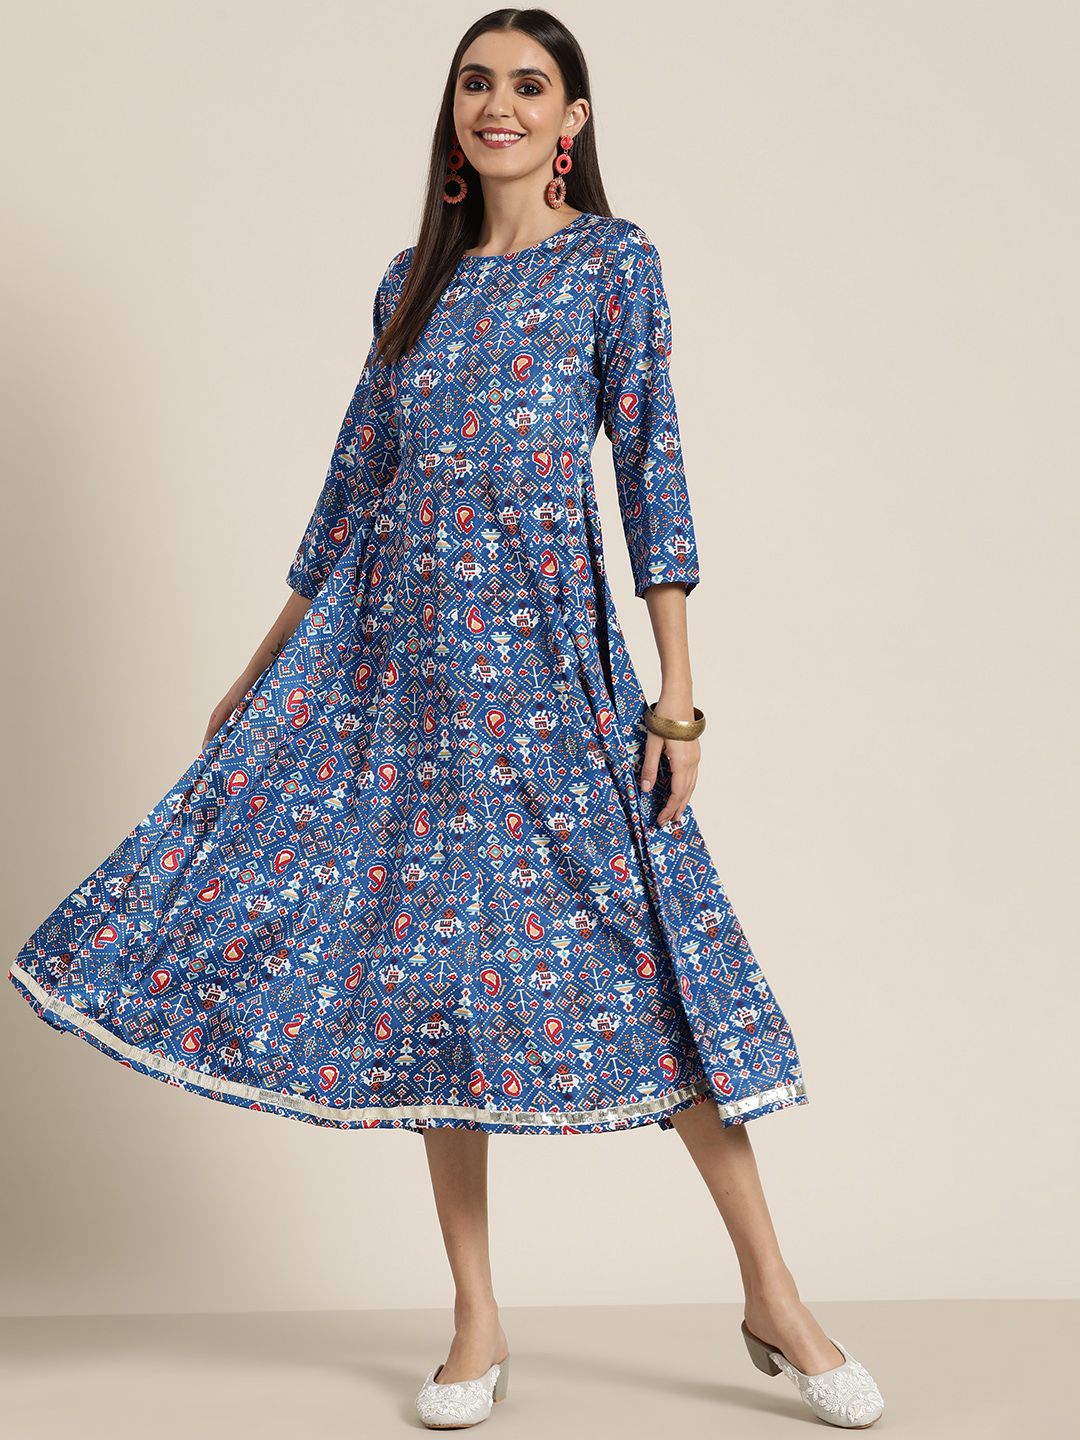 Shae by SASSAFRAS Blue & White Ethnic Motifs Ethnic A-Line Midi Dress Price in India